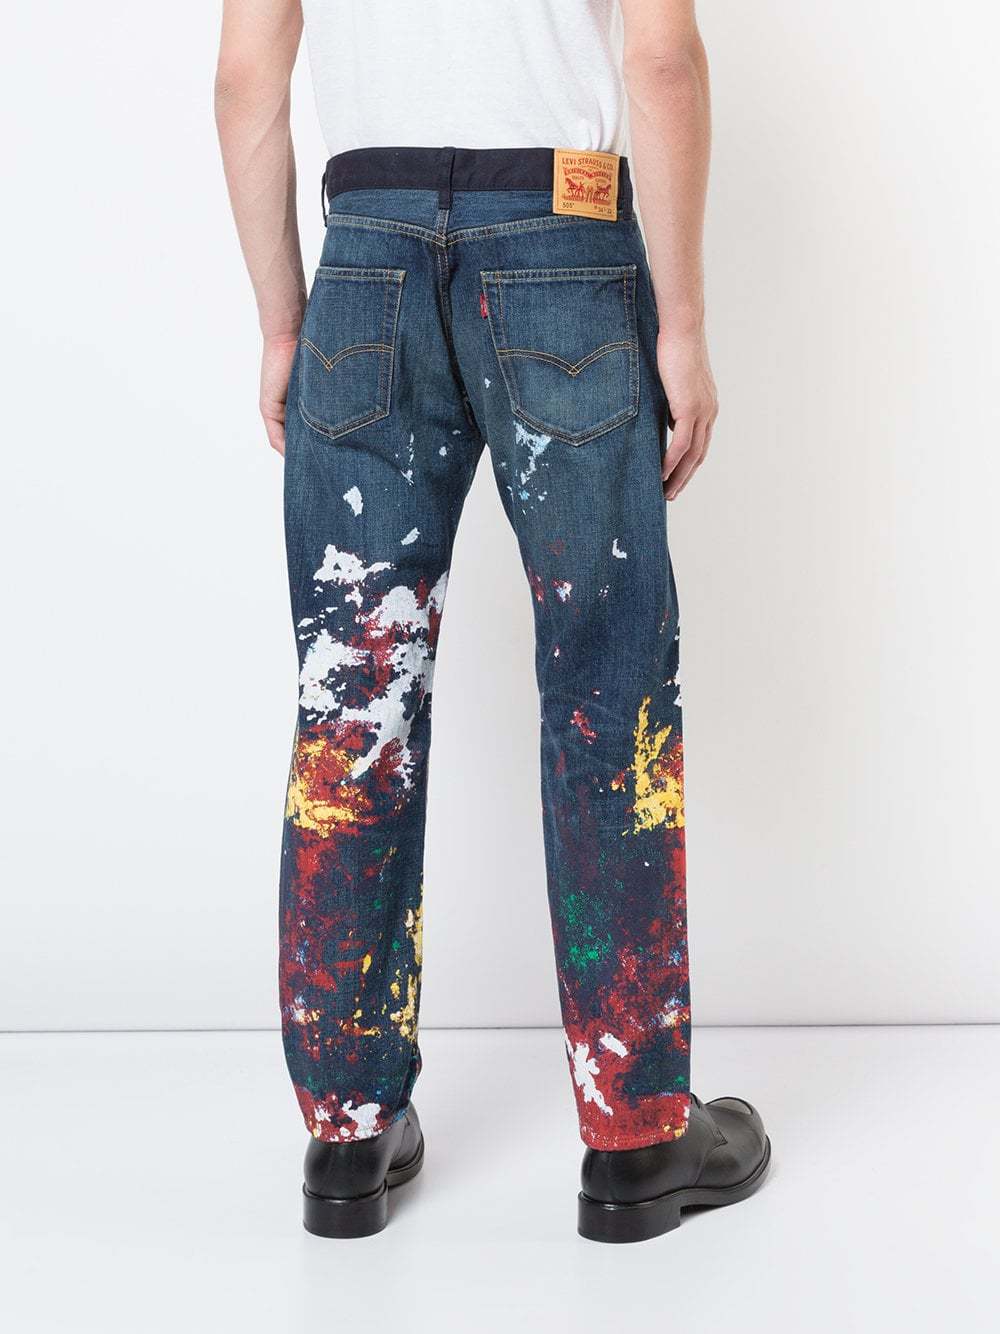 Verrassend Junya Watanabe MAN X Carhartt Paint Splatter Jeans, $520 YV-81